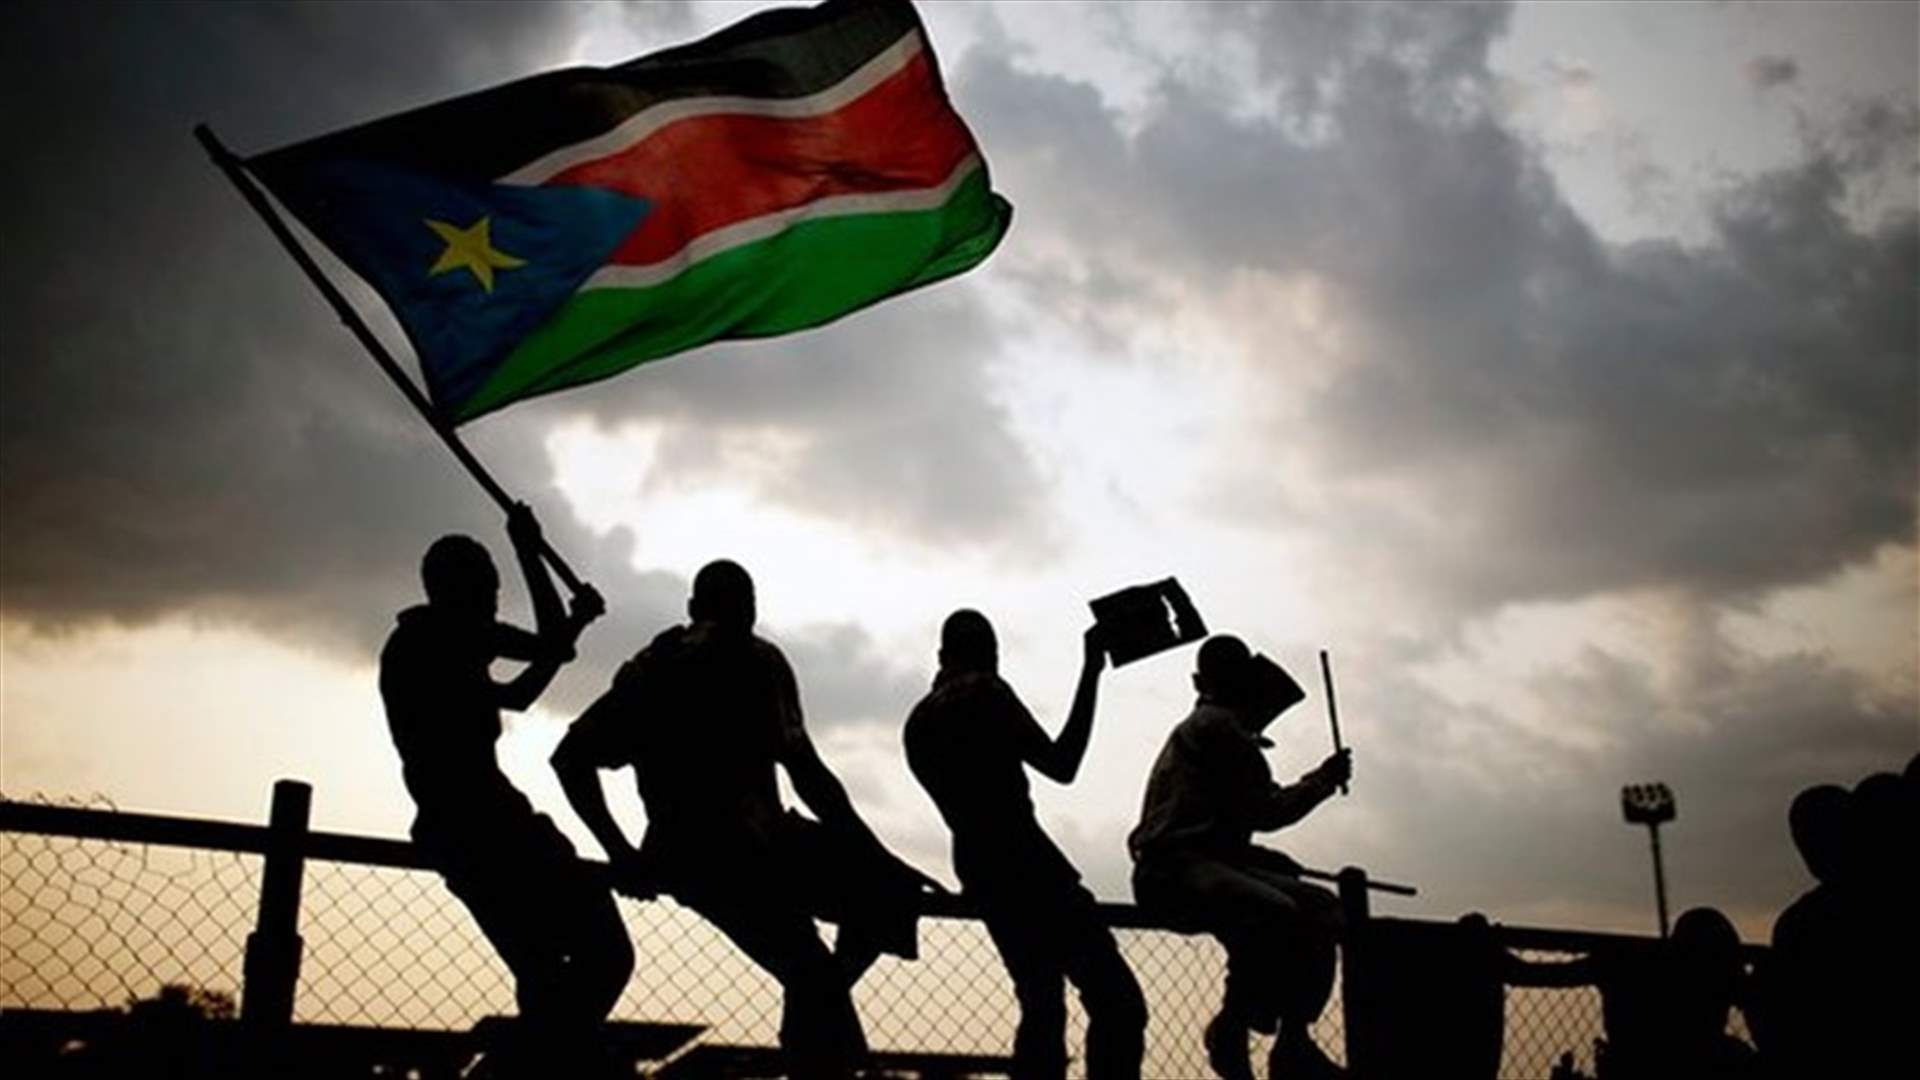 Gunfire heard in parts of south Sudan capital Juba on Sunday - Reuters witness